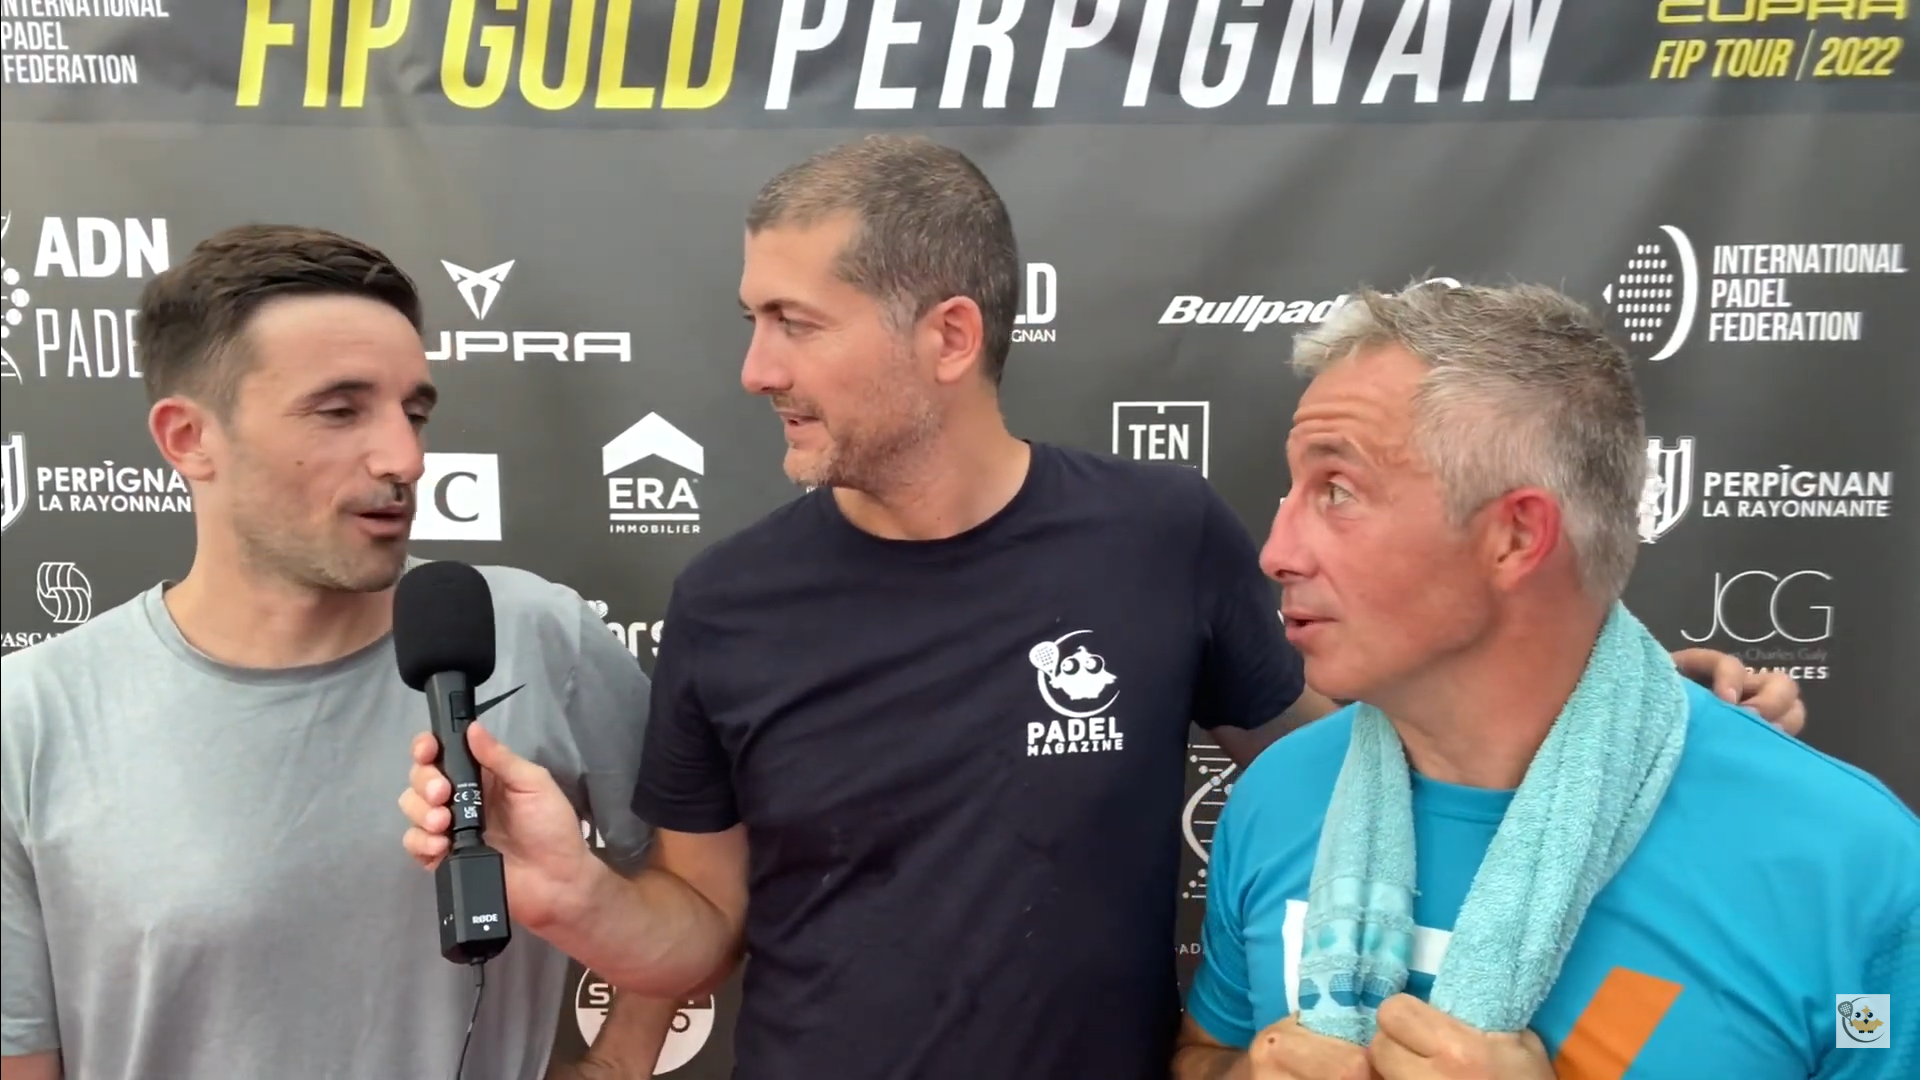 JP Pellicer et Dominique Campana Fip Gold Perpignan ITW